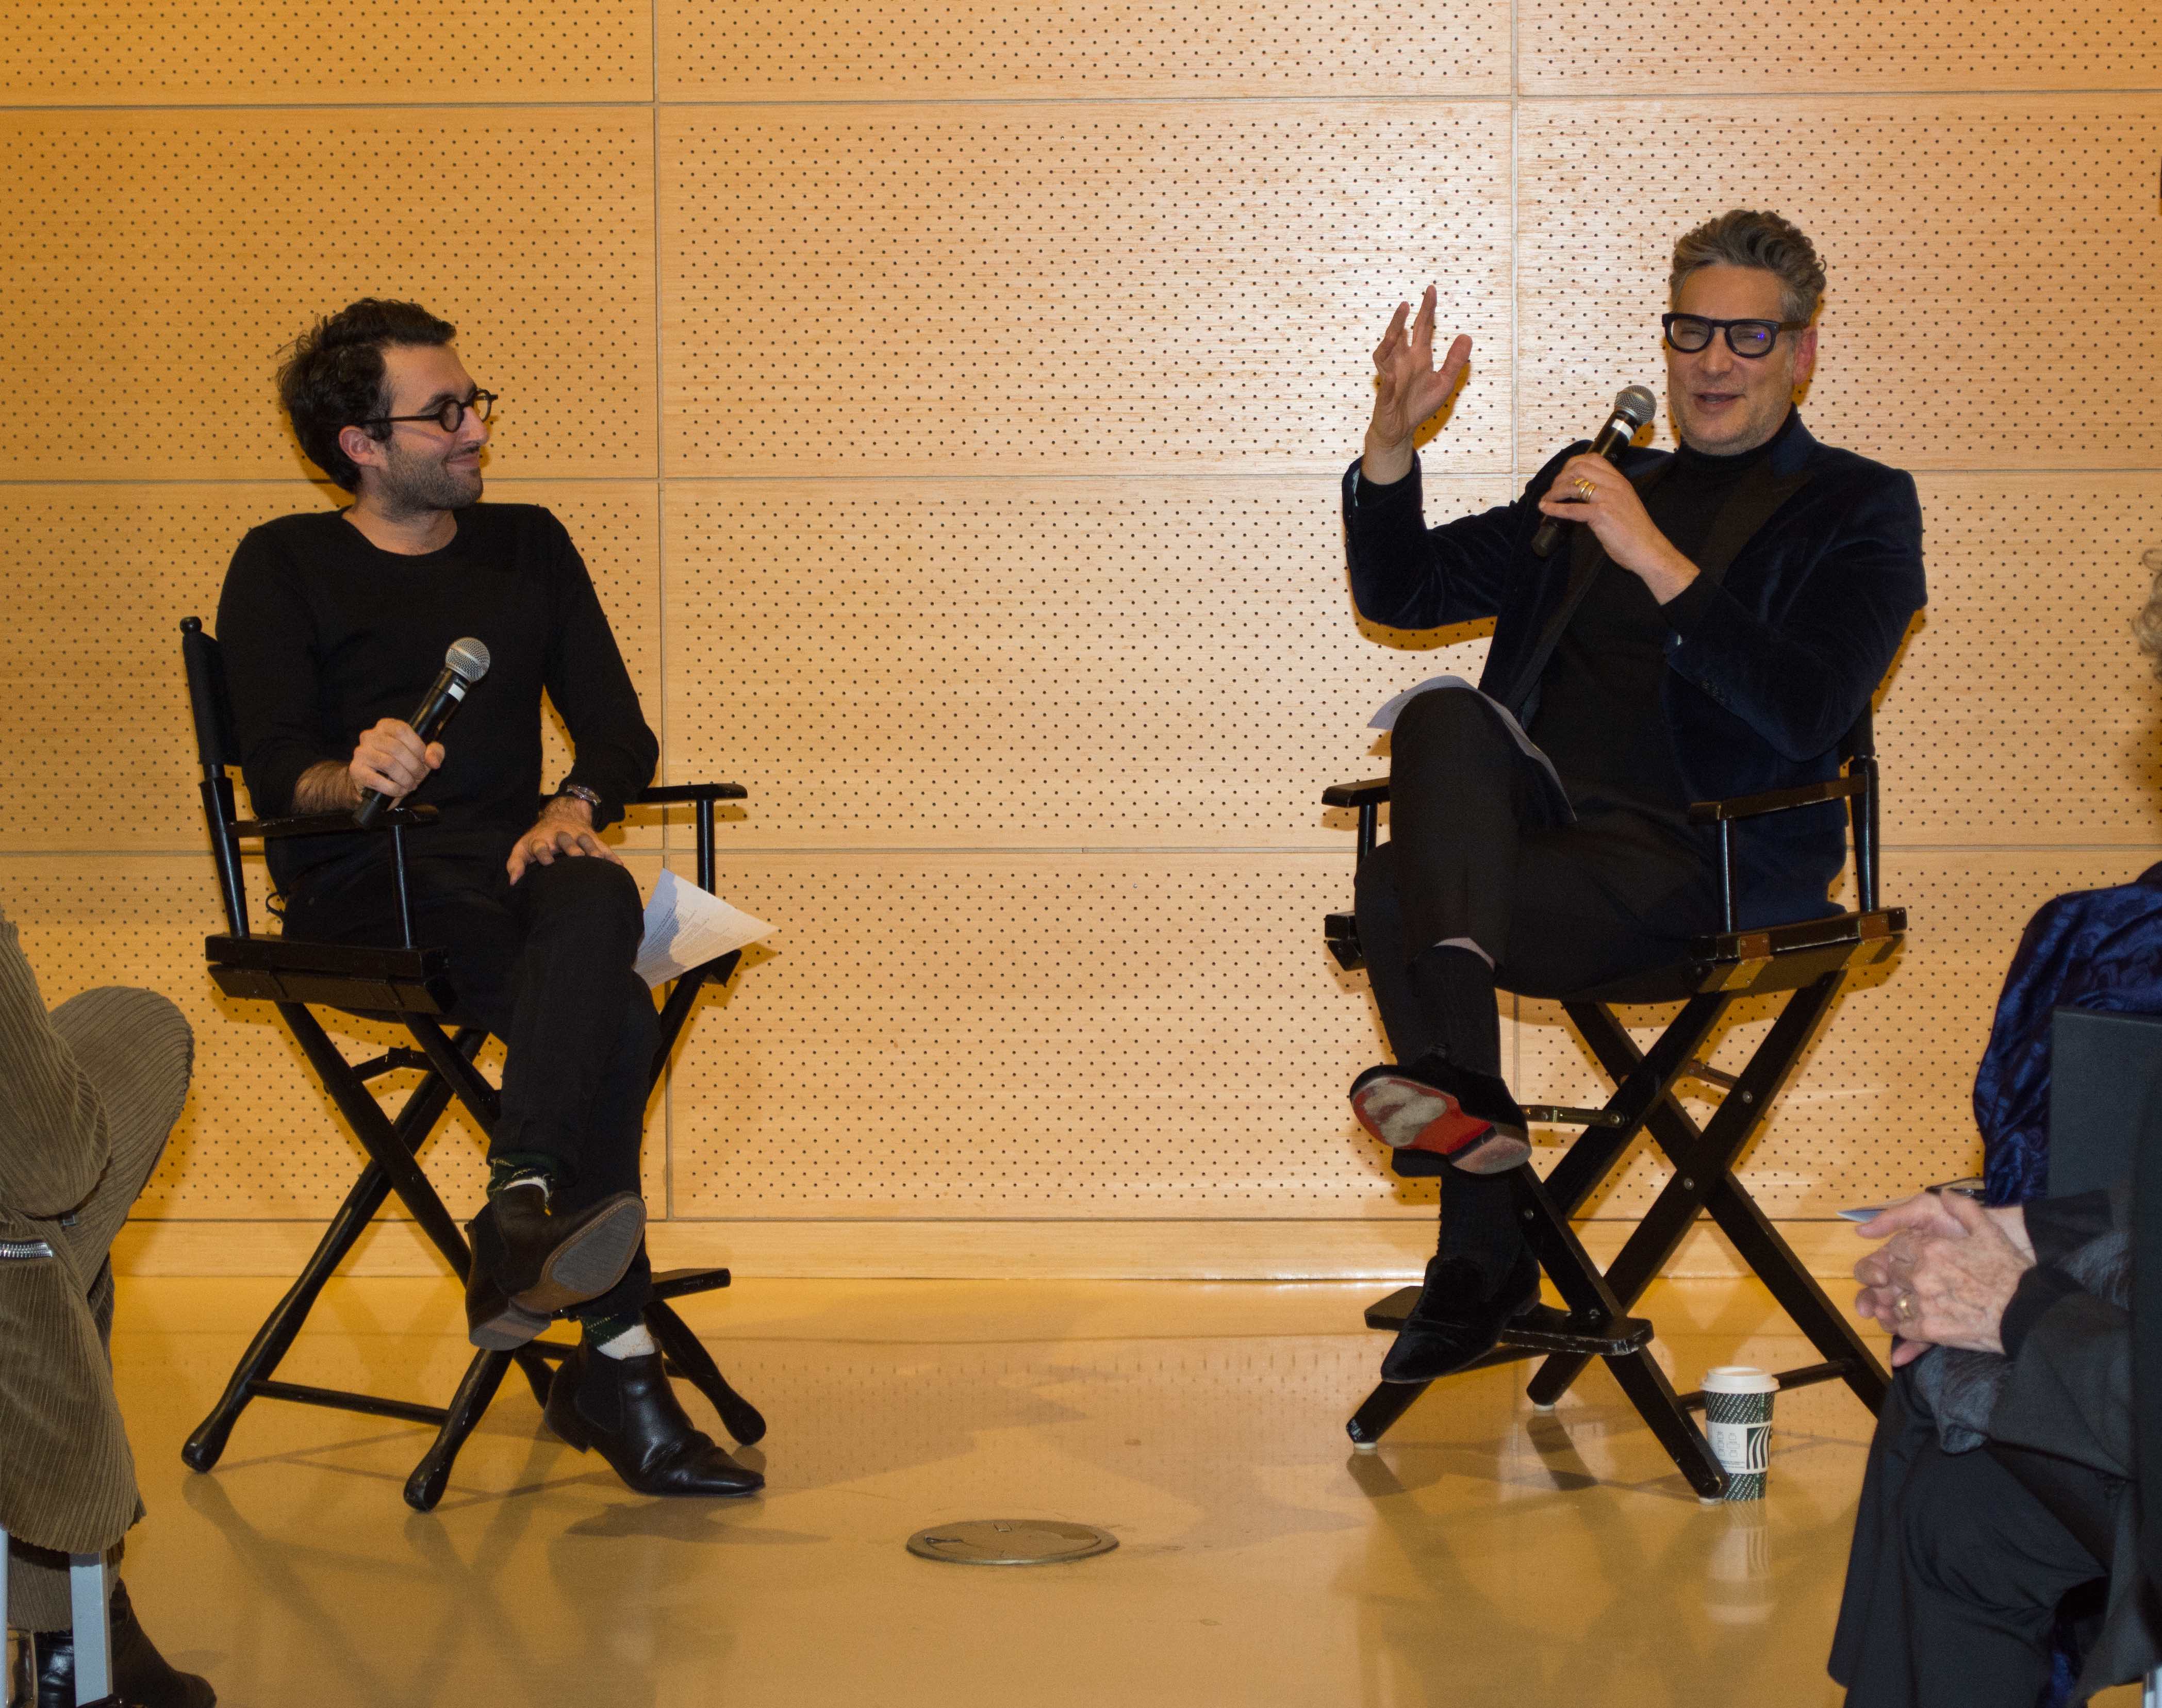 Andrew Gelwicks (celebrity stylist) and Cameron Silver (Fashion Director, Halston), in conversation